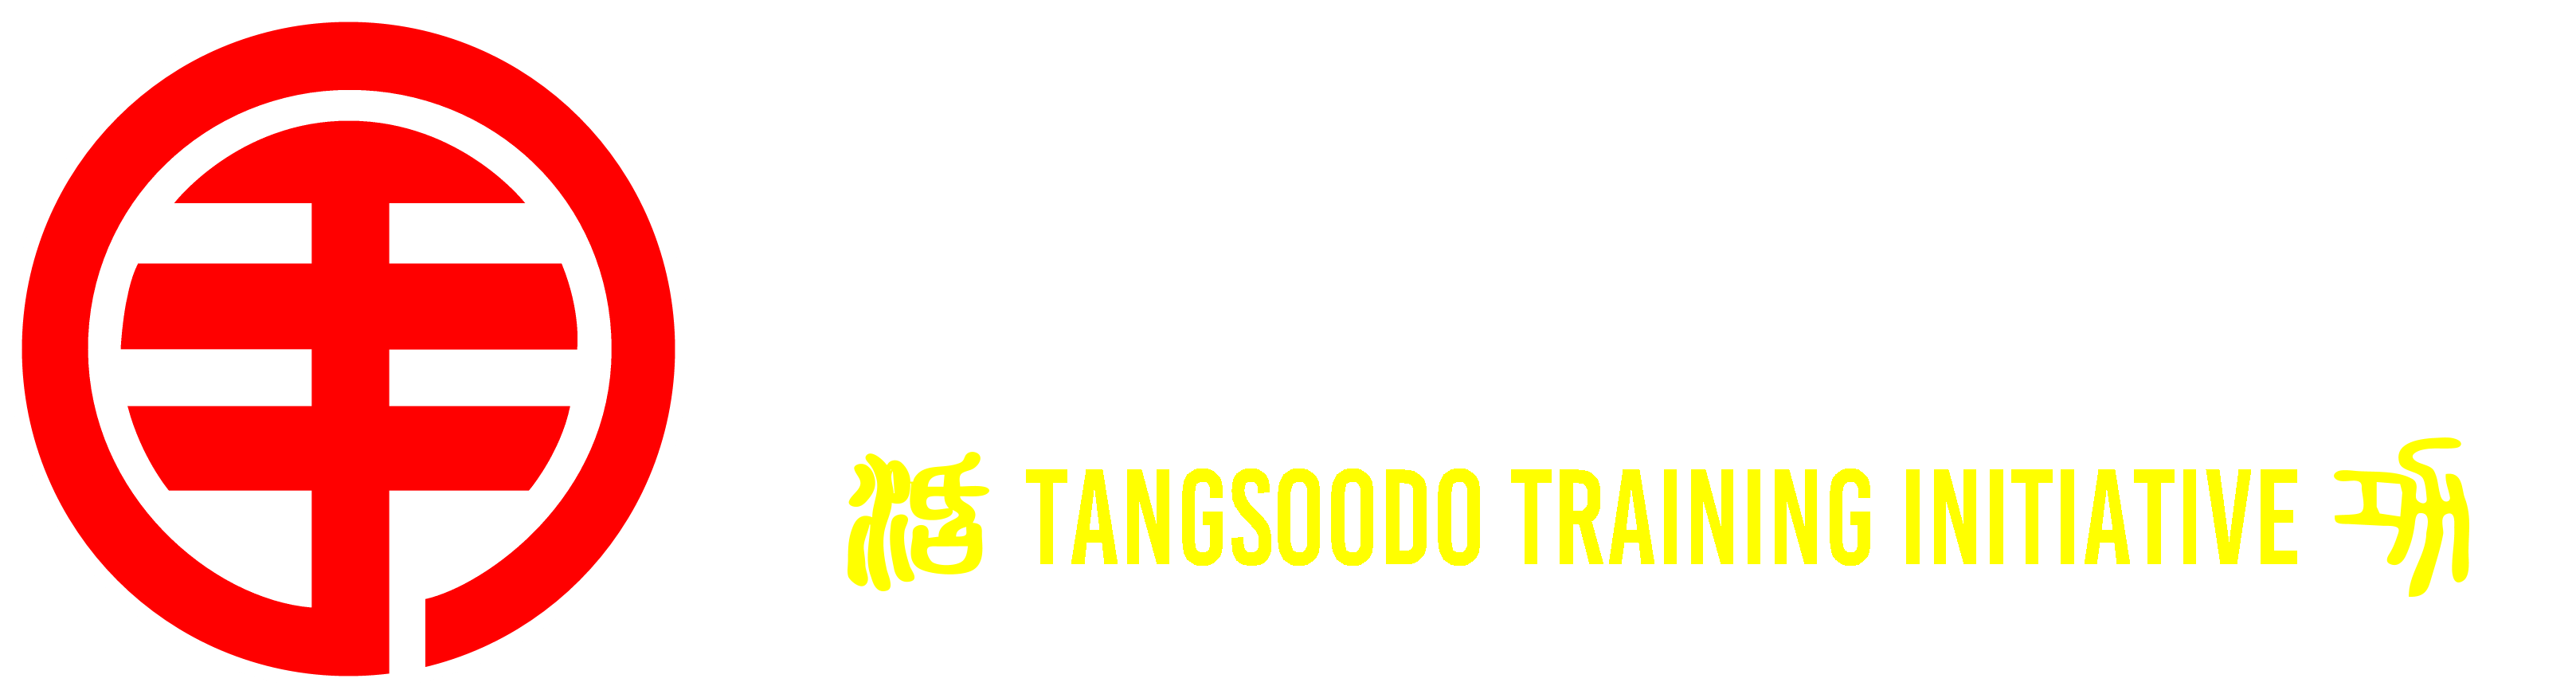 Tangsoodo Training Initiative